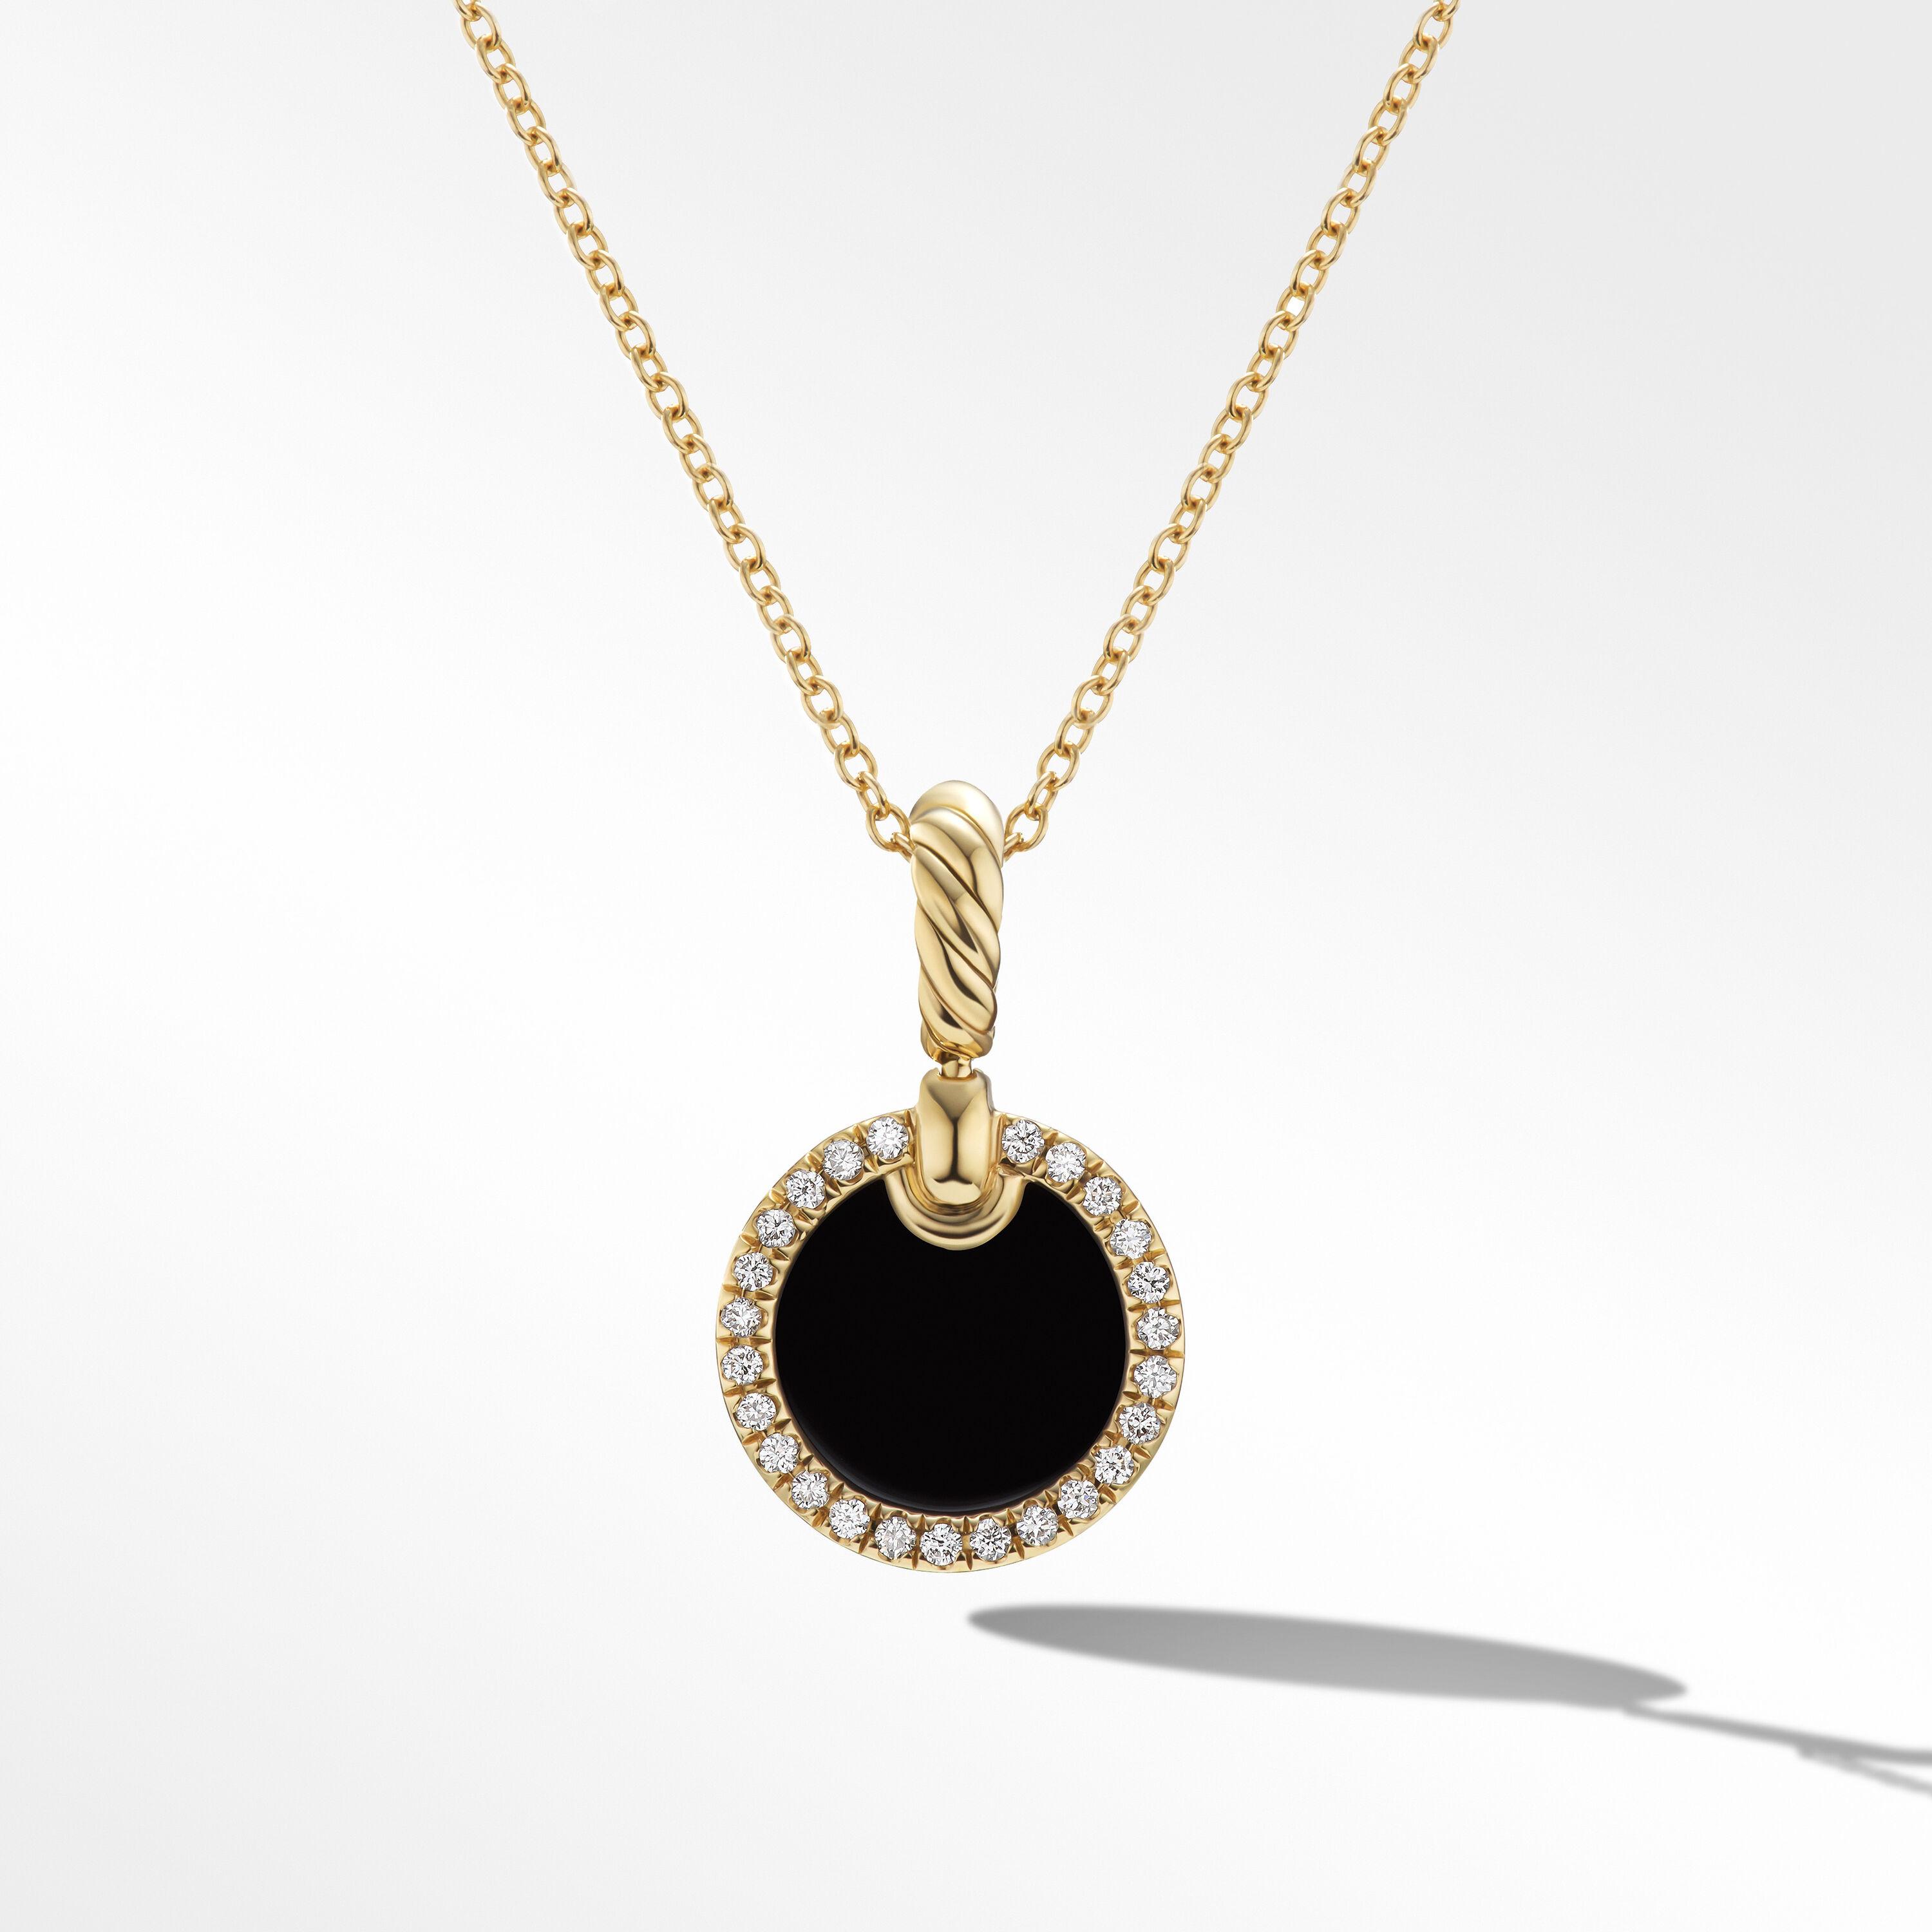 David Yurman Petite DY Elements Pendant Necklace with Black Onyx and Pave Diamonds